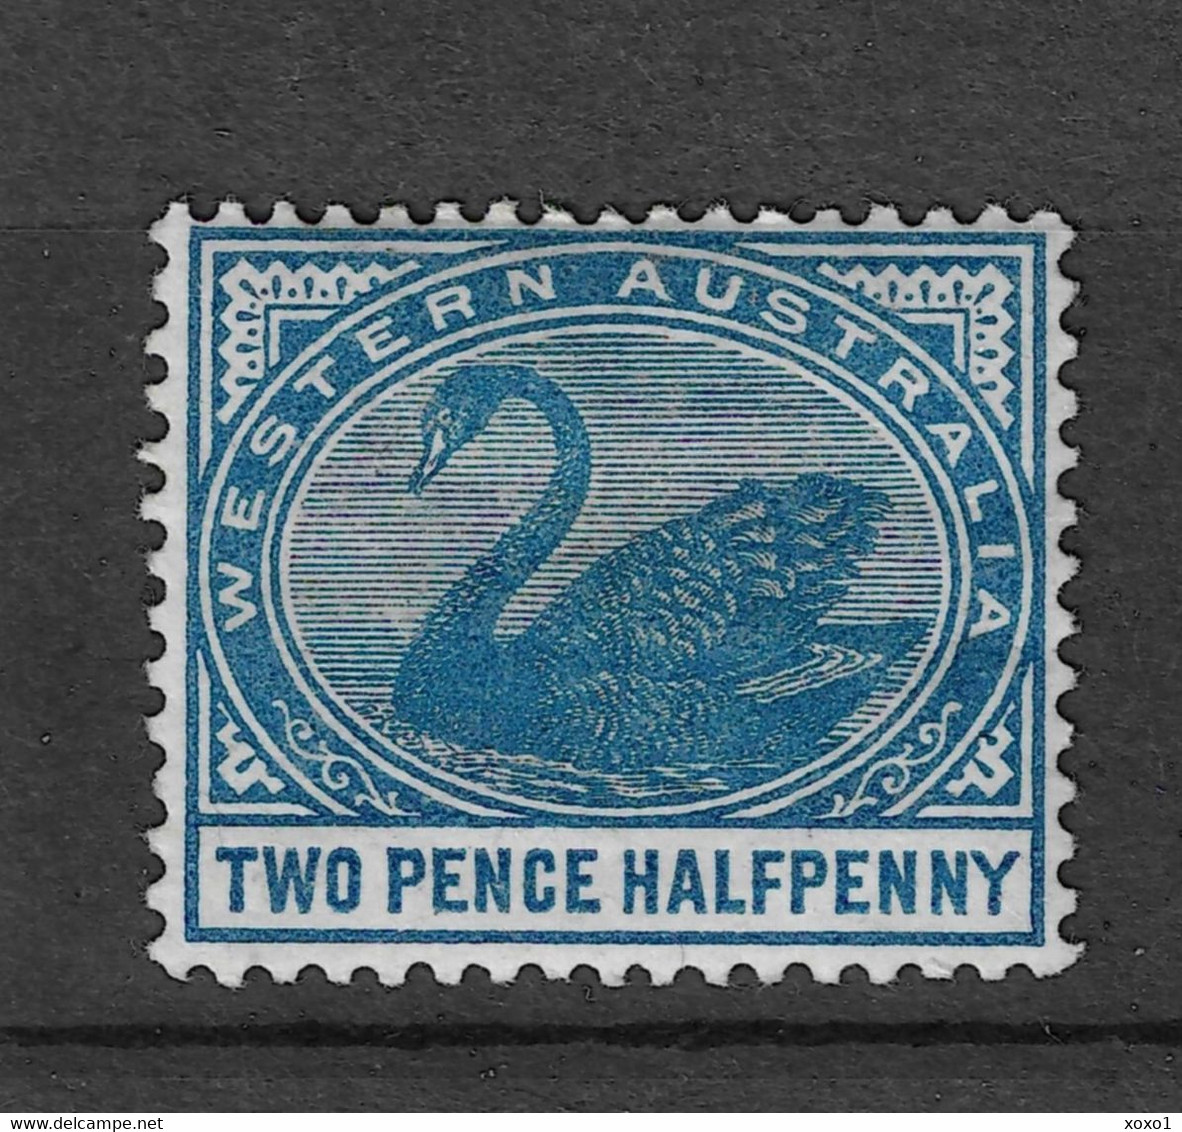 Western Australia 1890/93 MiNr. 36  Westaustralien Birds Black Swan MLH 13,00 € - Mint Stamps